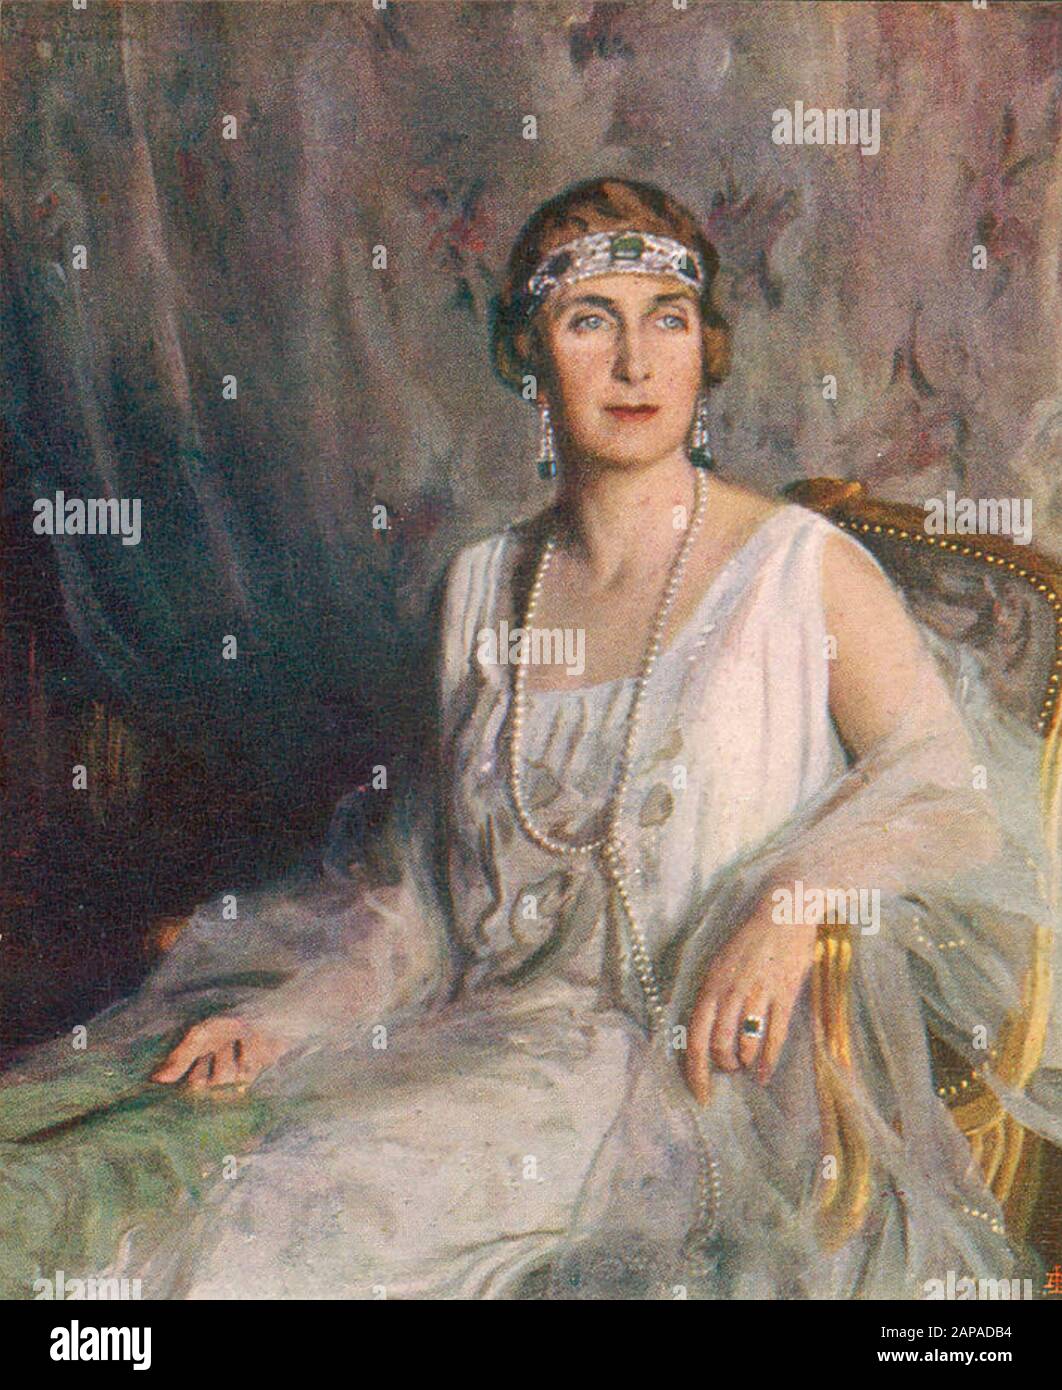 Victoria EUGENIE DI BATTENBERG (1887-1969) Regina di Spagna come moglie di Alfonso XIII. Dipinto da Filippo de László circa 1920 Foto Stock